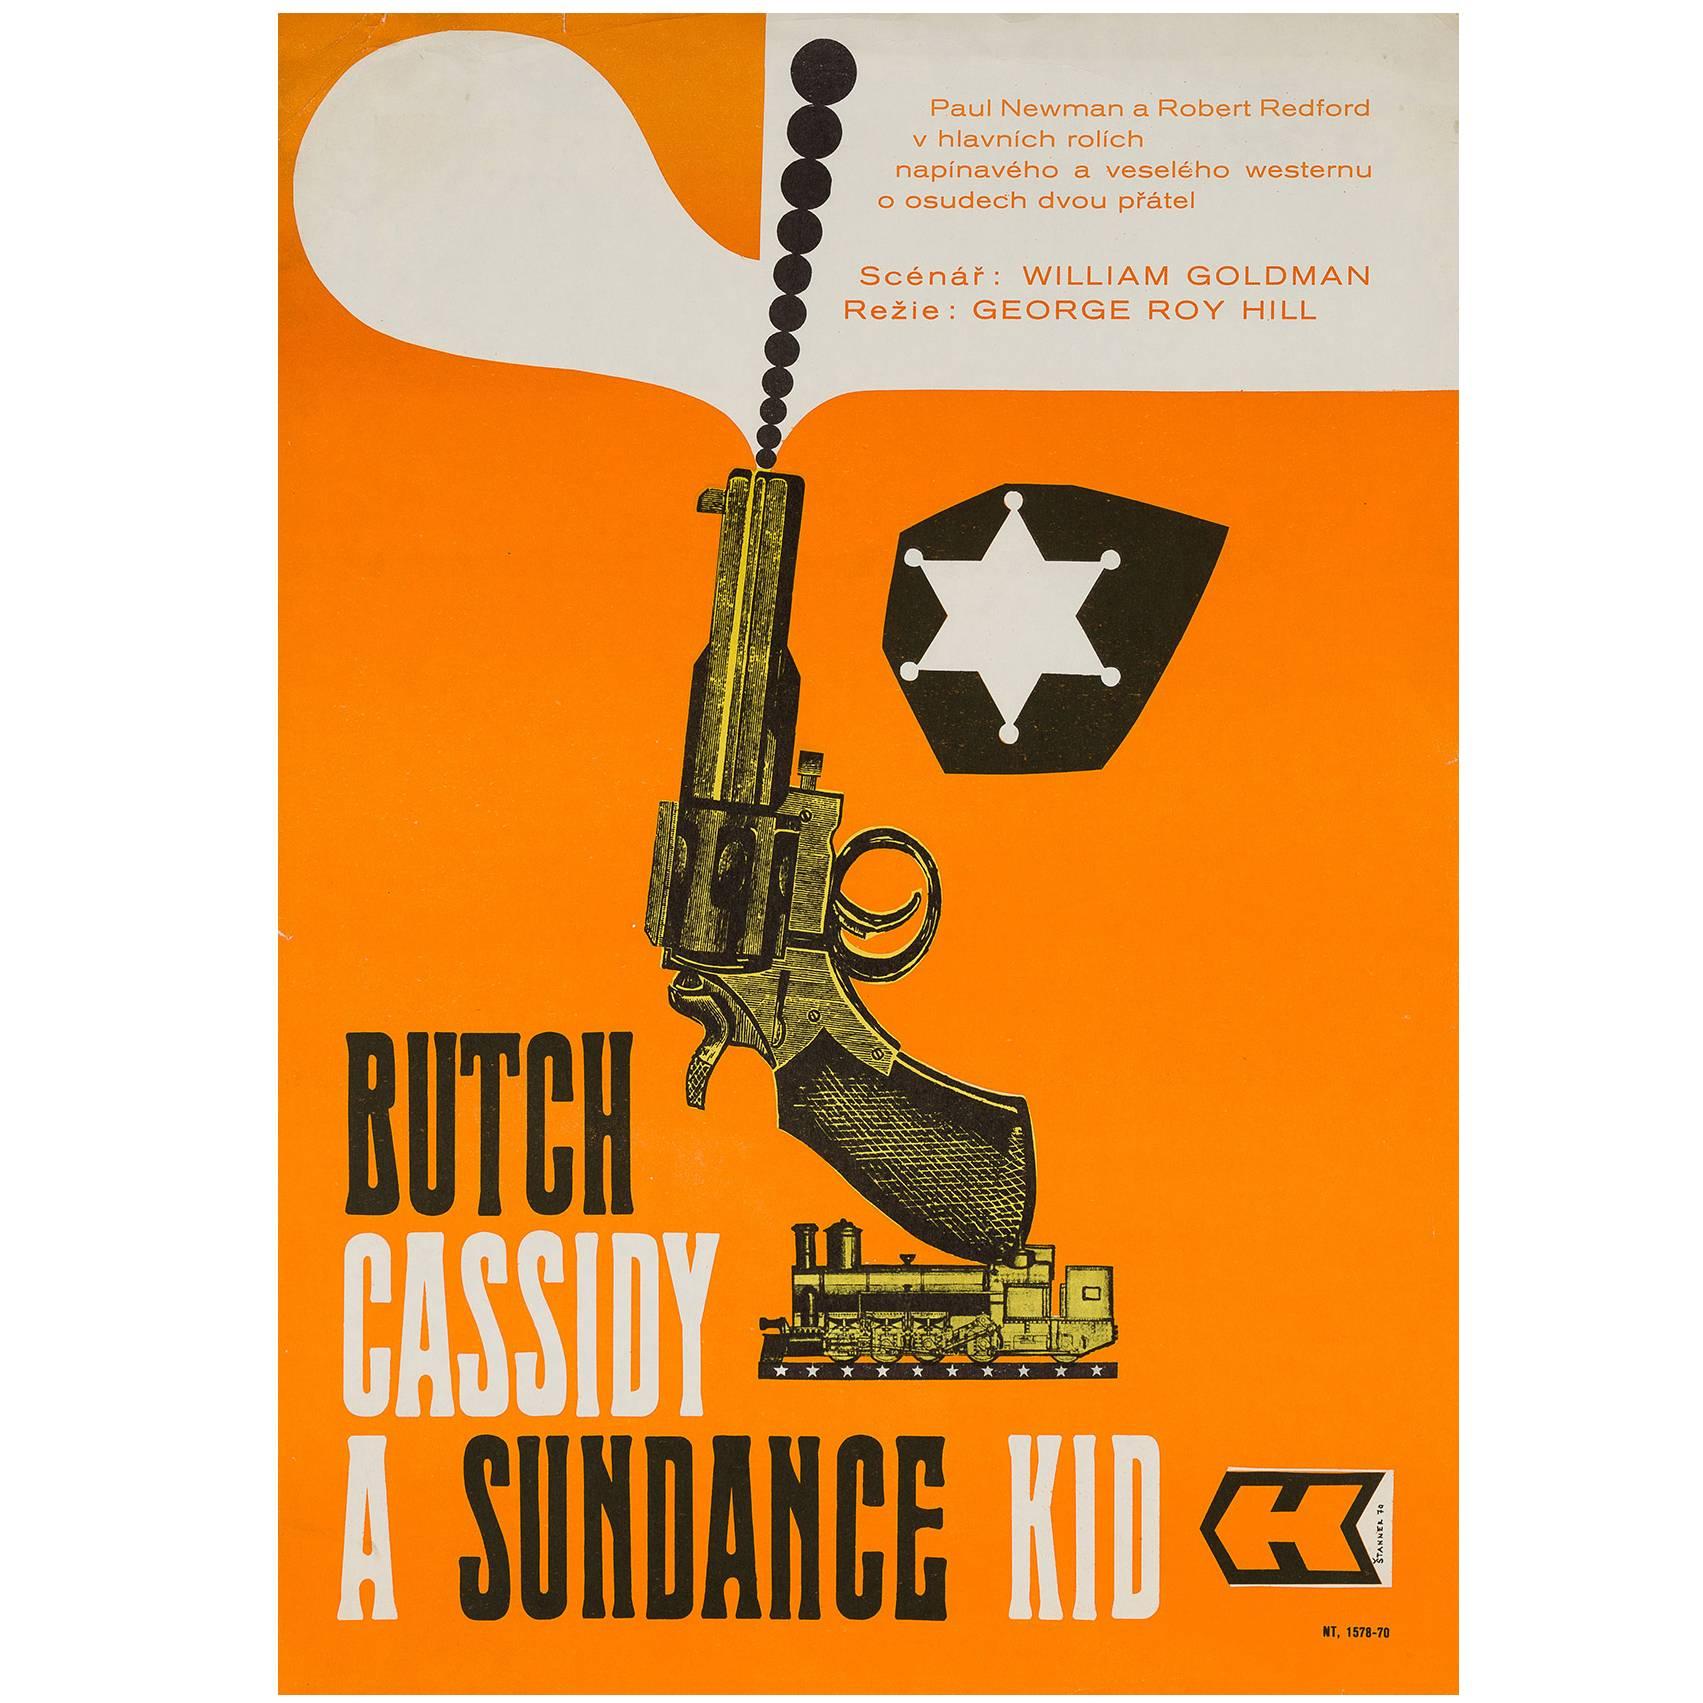 "Butch Cassidy and the Sundance Kid" Original Czech Film Poster, Stanner, 1970